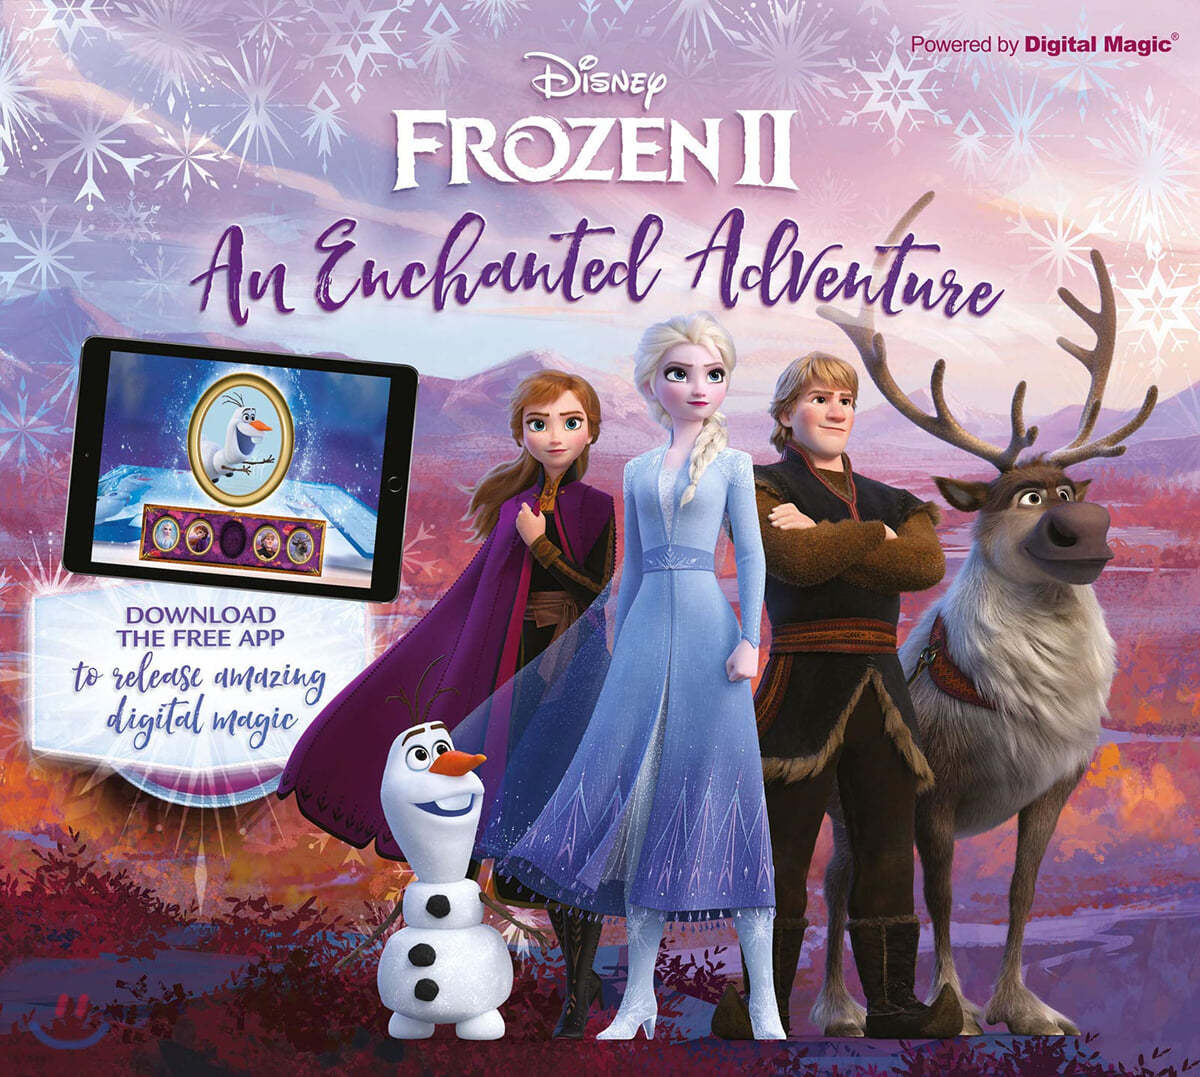 Frozen 2 : An Enchanted Adventure 디즈니 겨울왕국 2 (증강현실 앱 다운로드 포함)